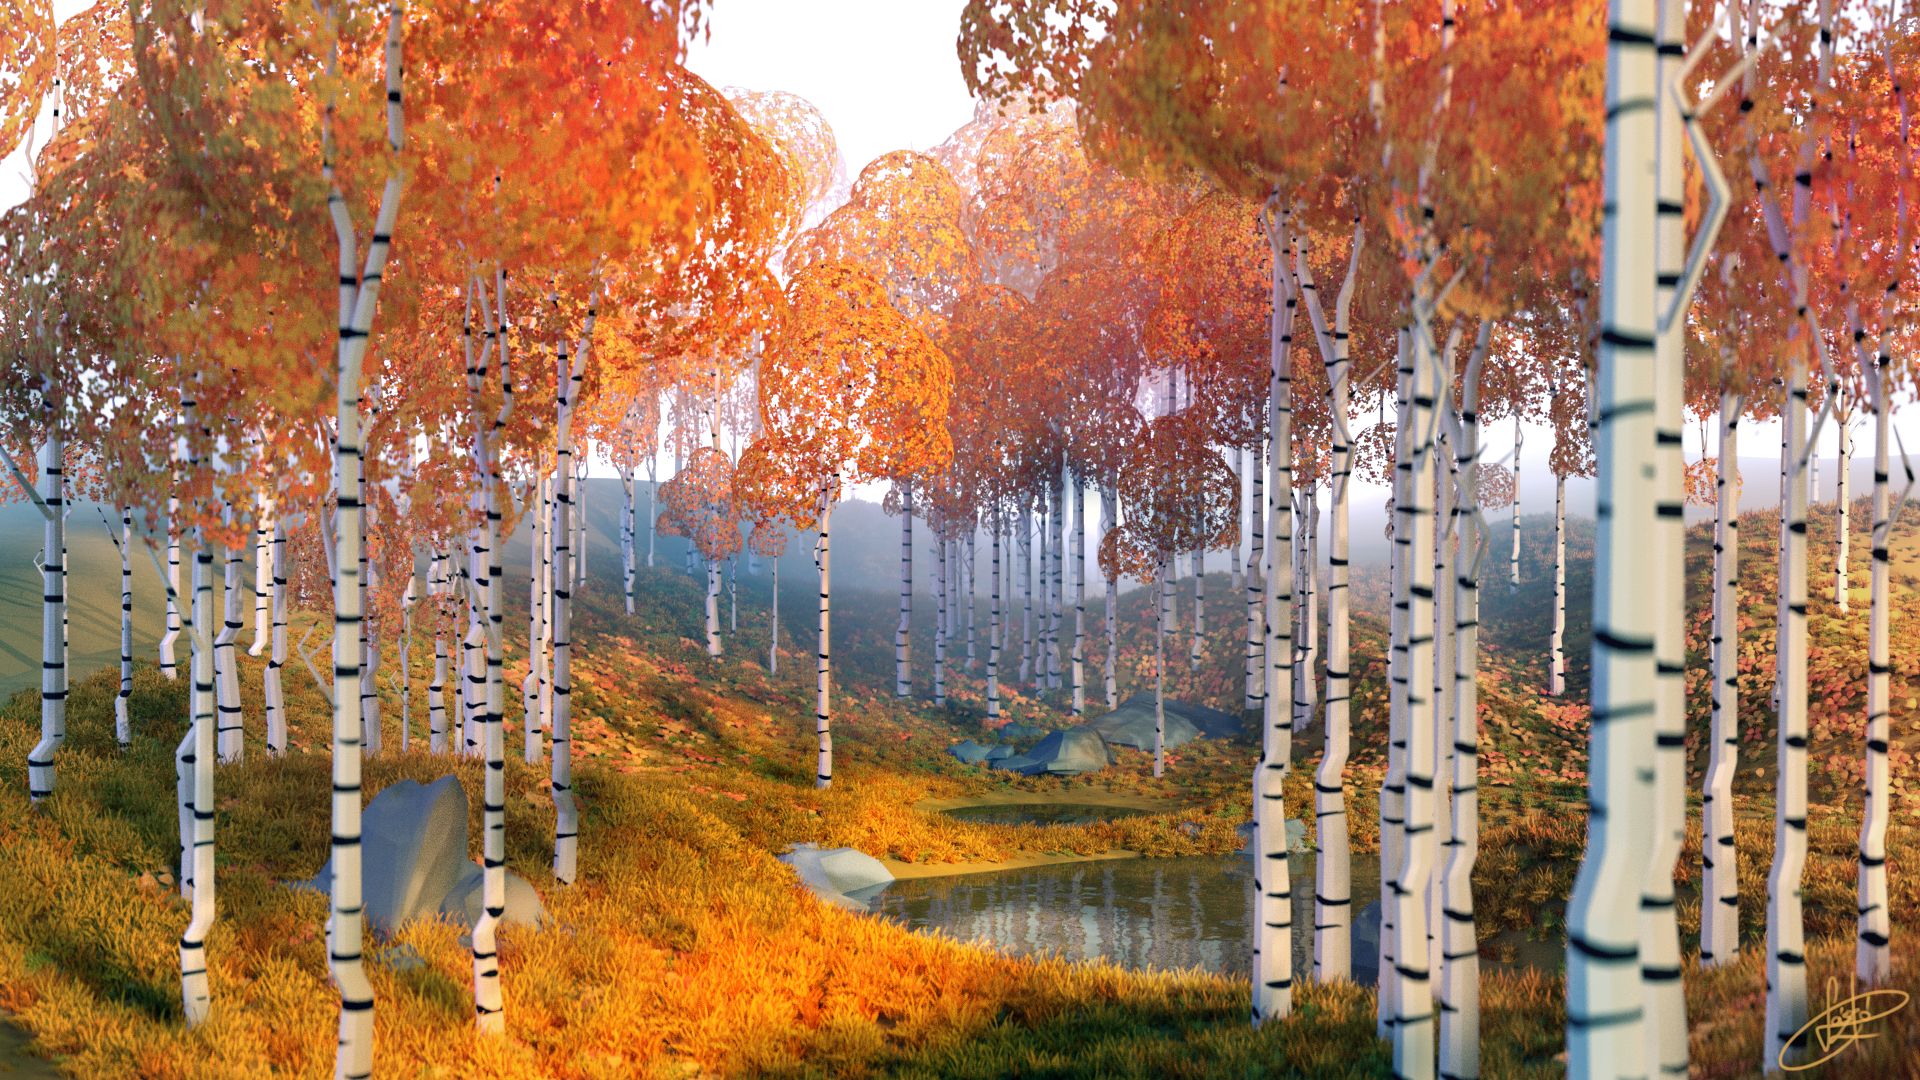 Autumn forest environment pixels: Art